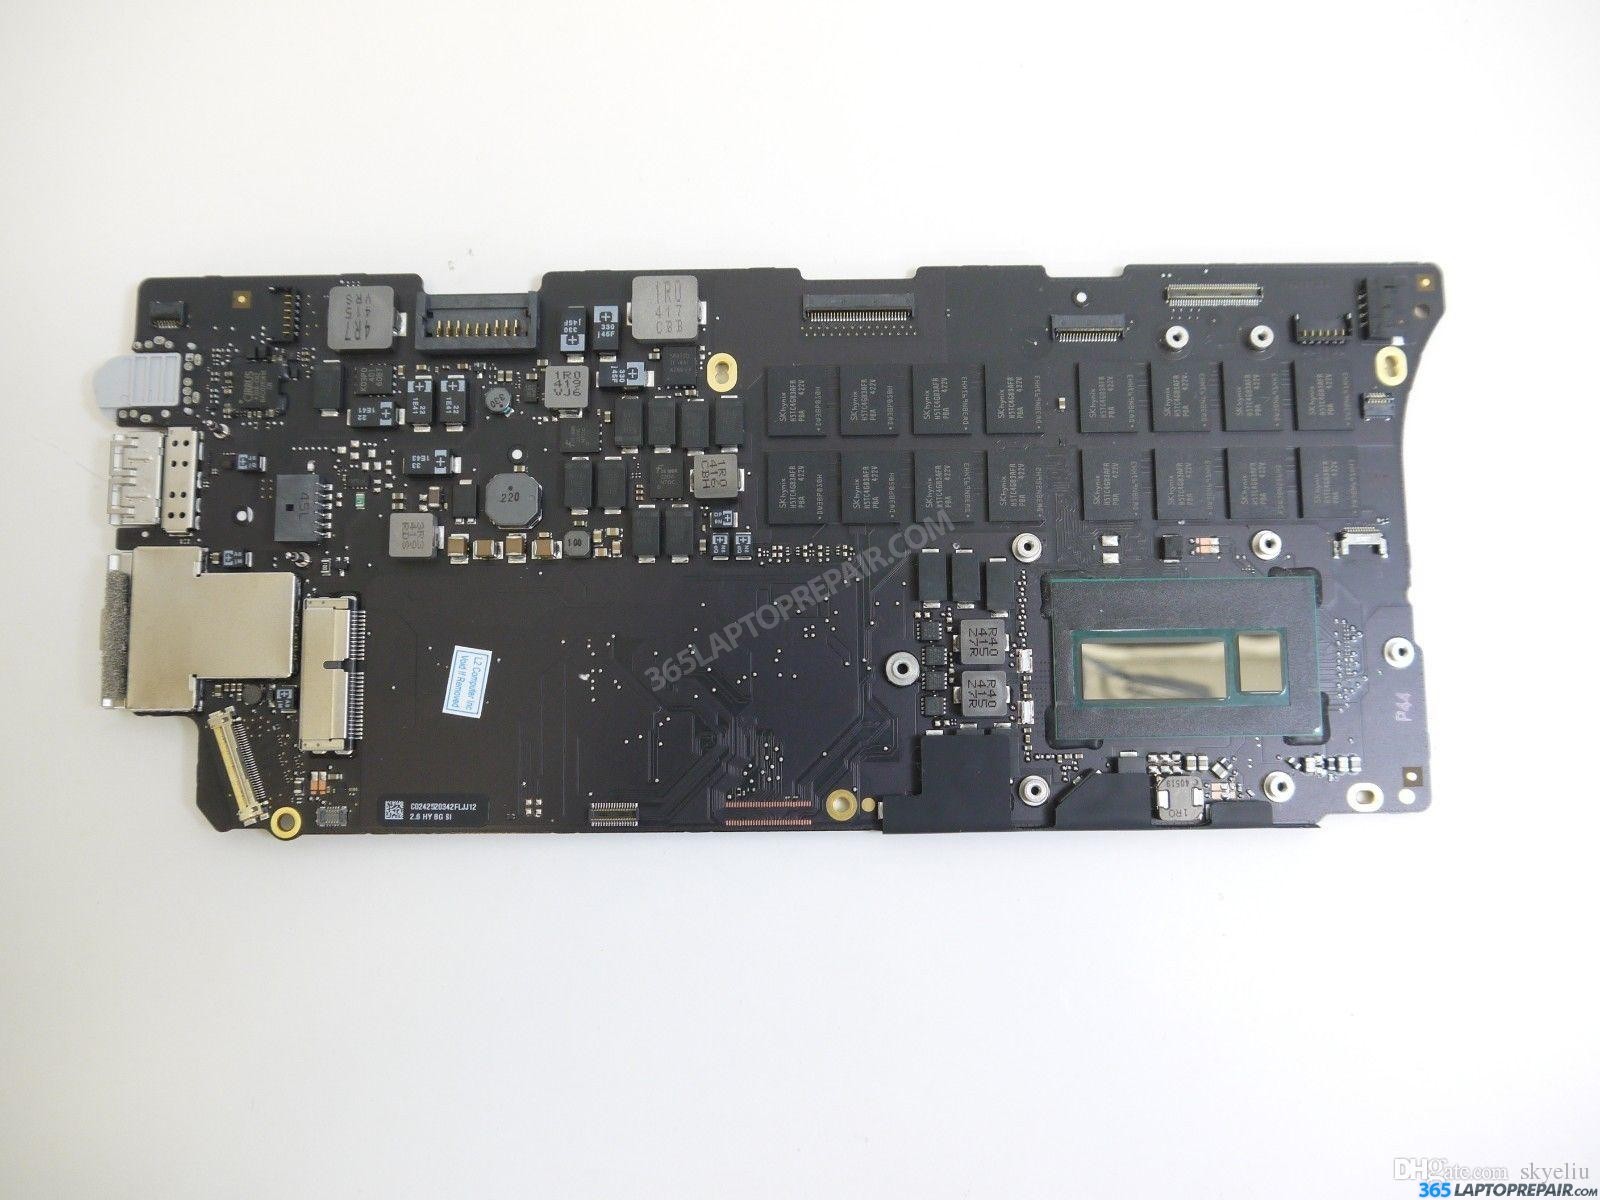 2015 macbook pro logic board replacement cost